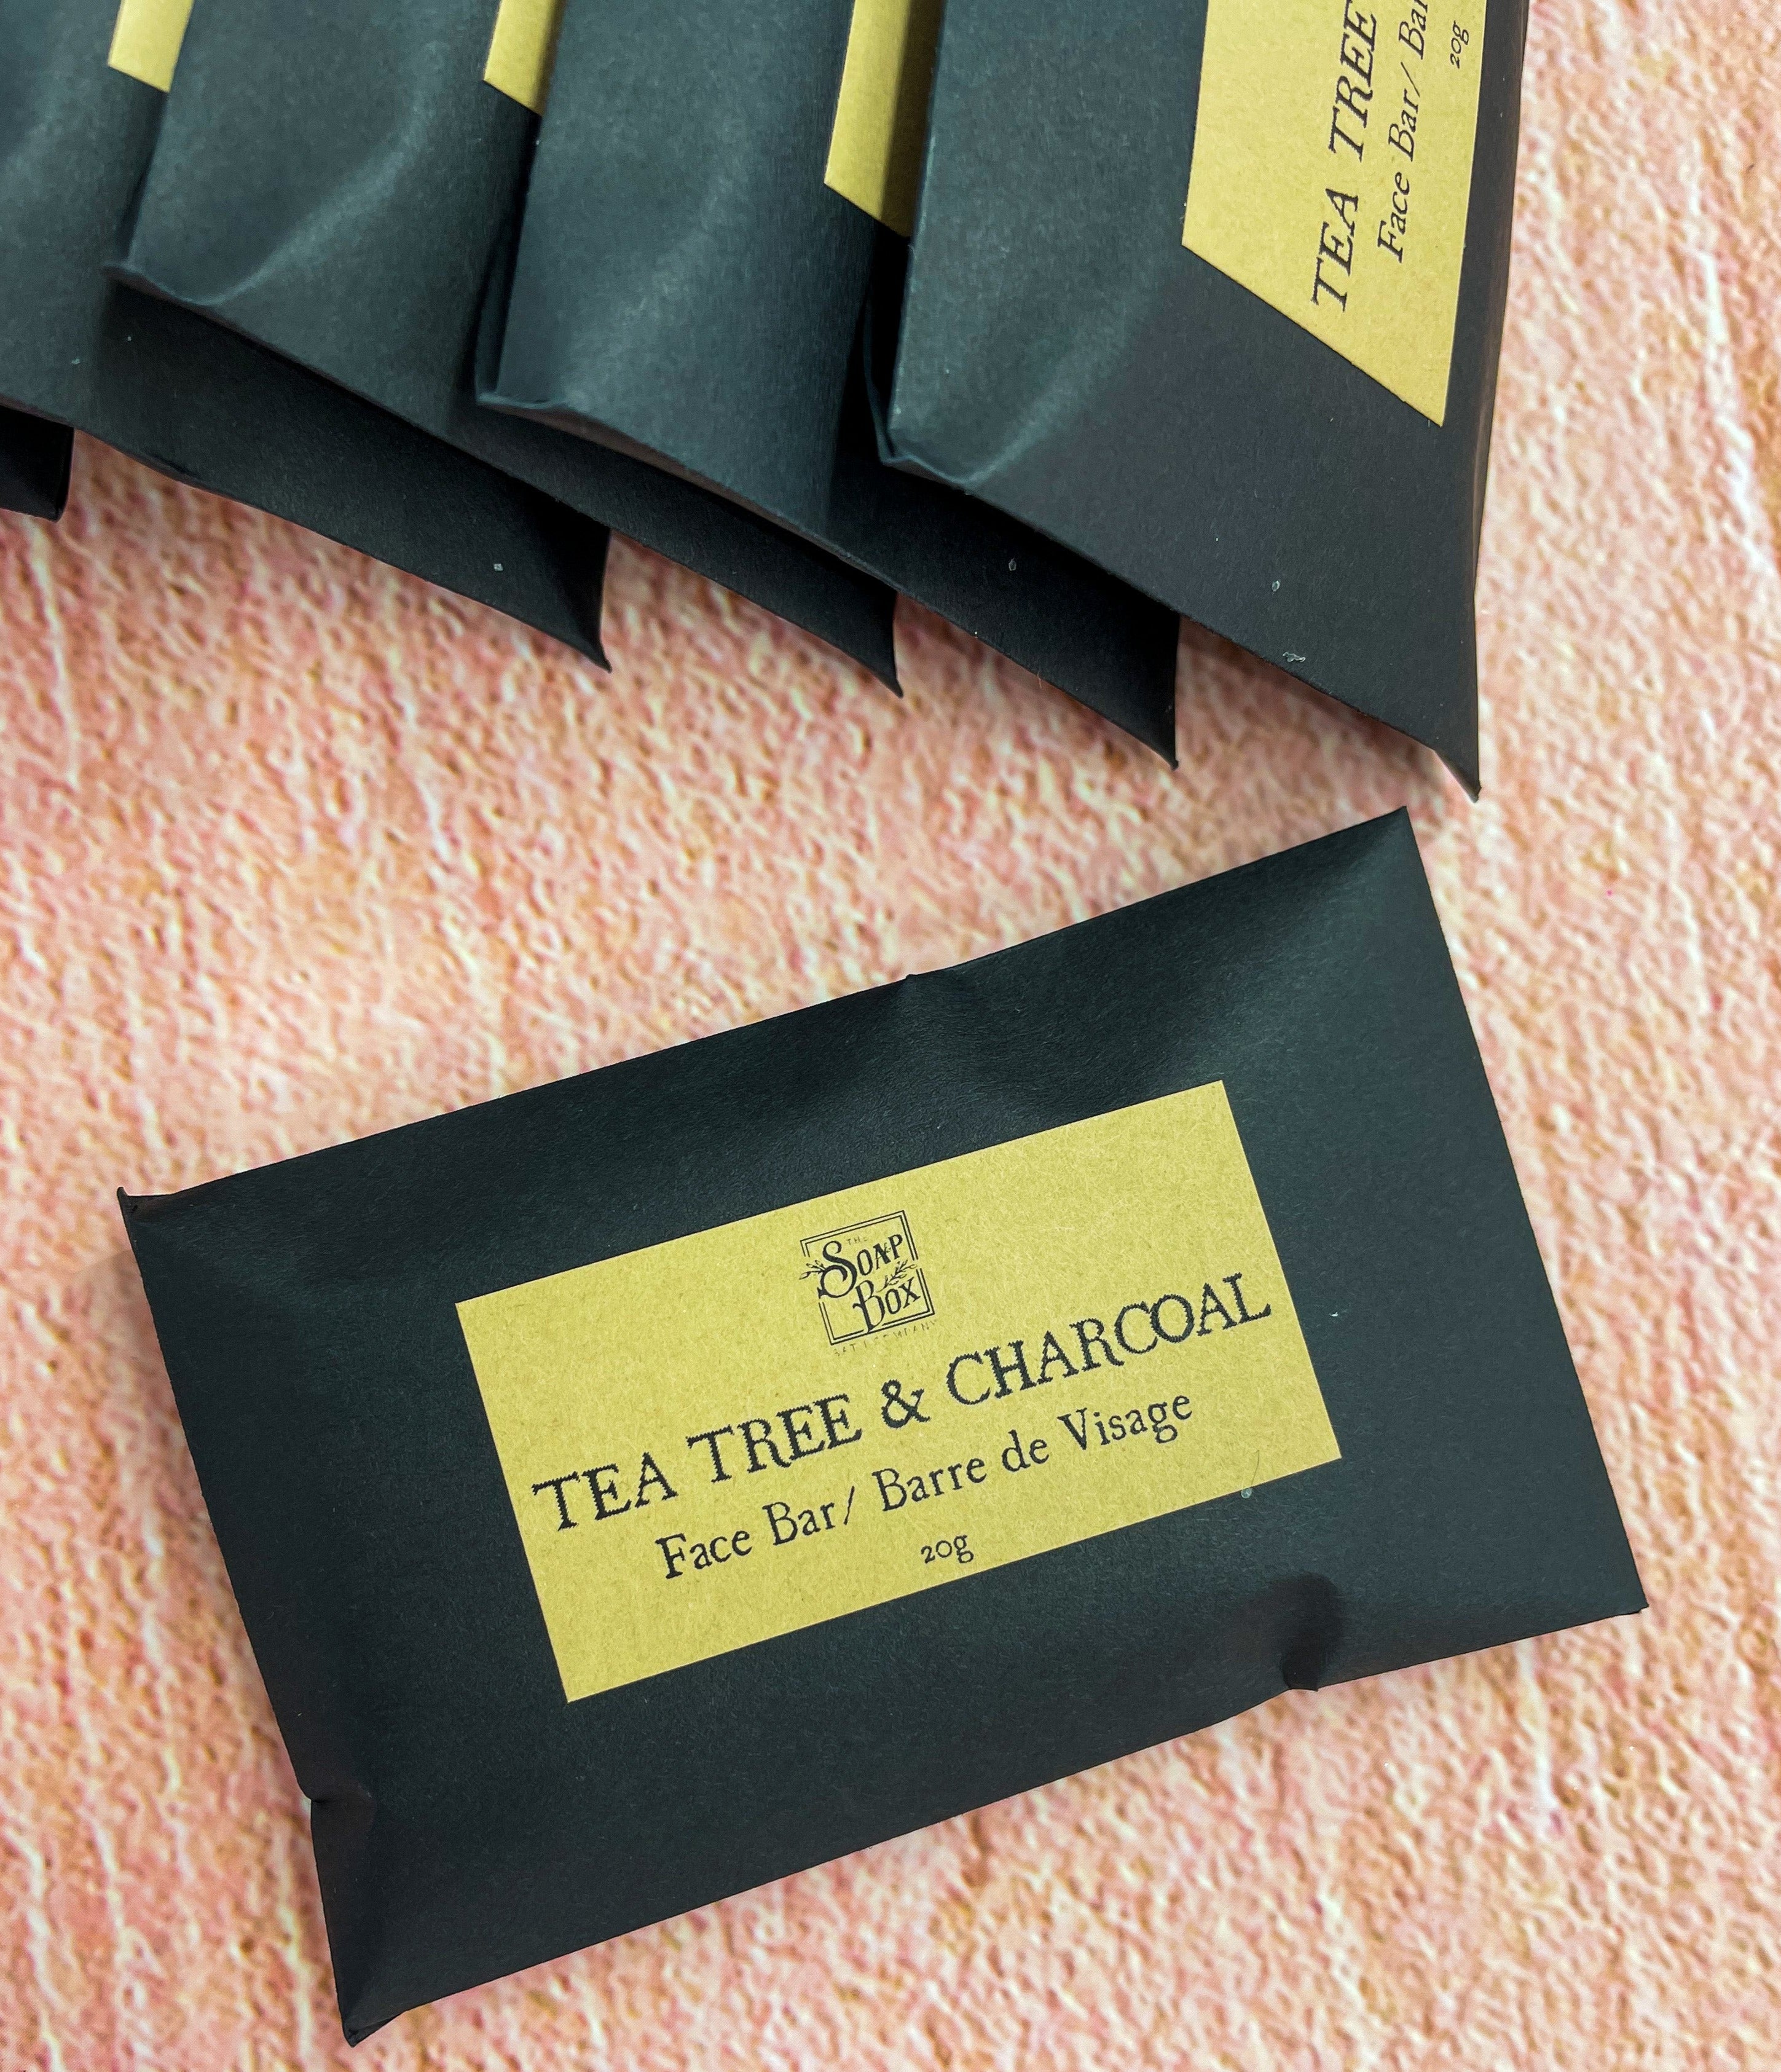 Tea Tree & Charcoal Facial Cleansing Bar